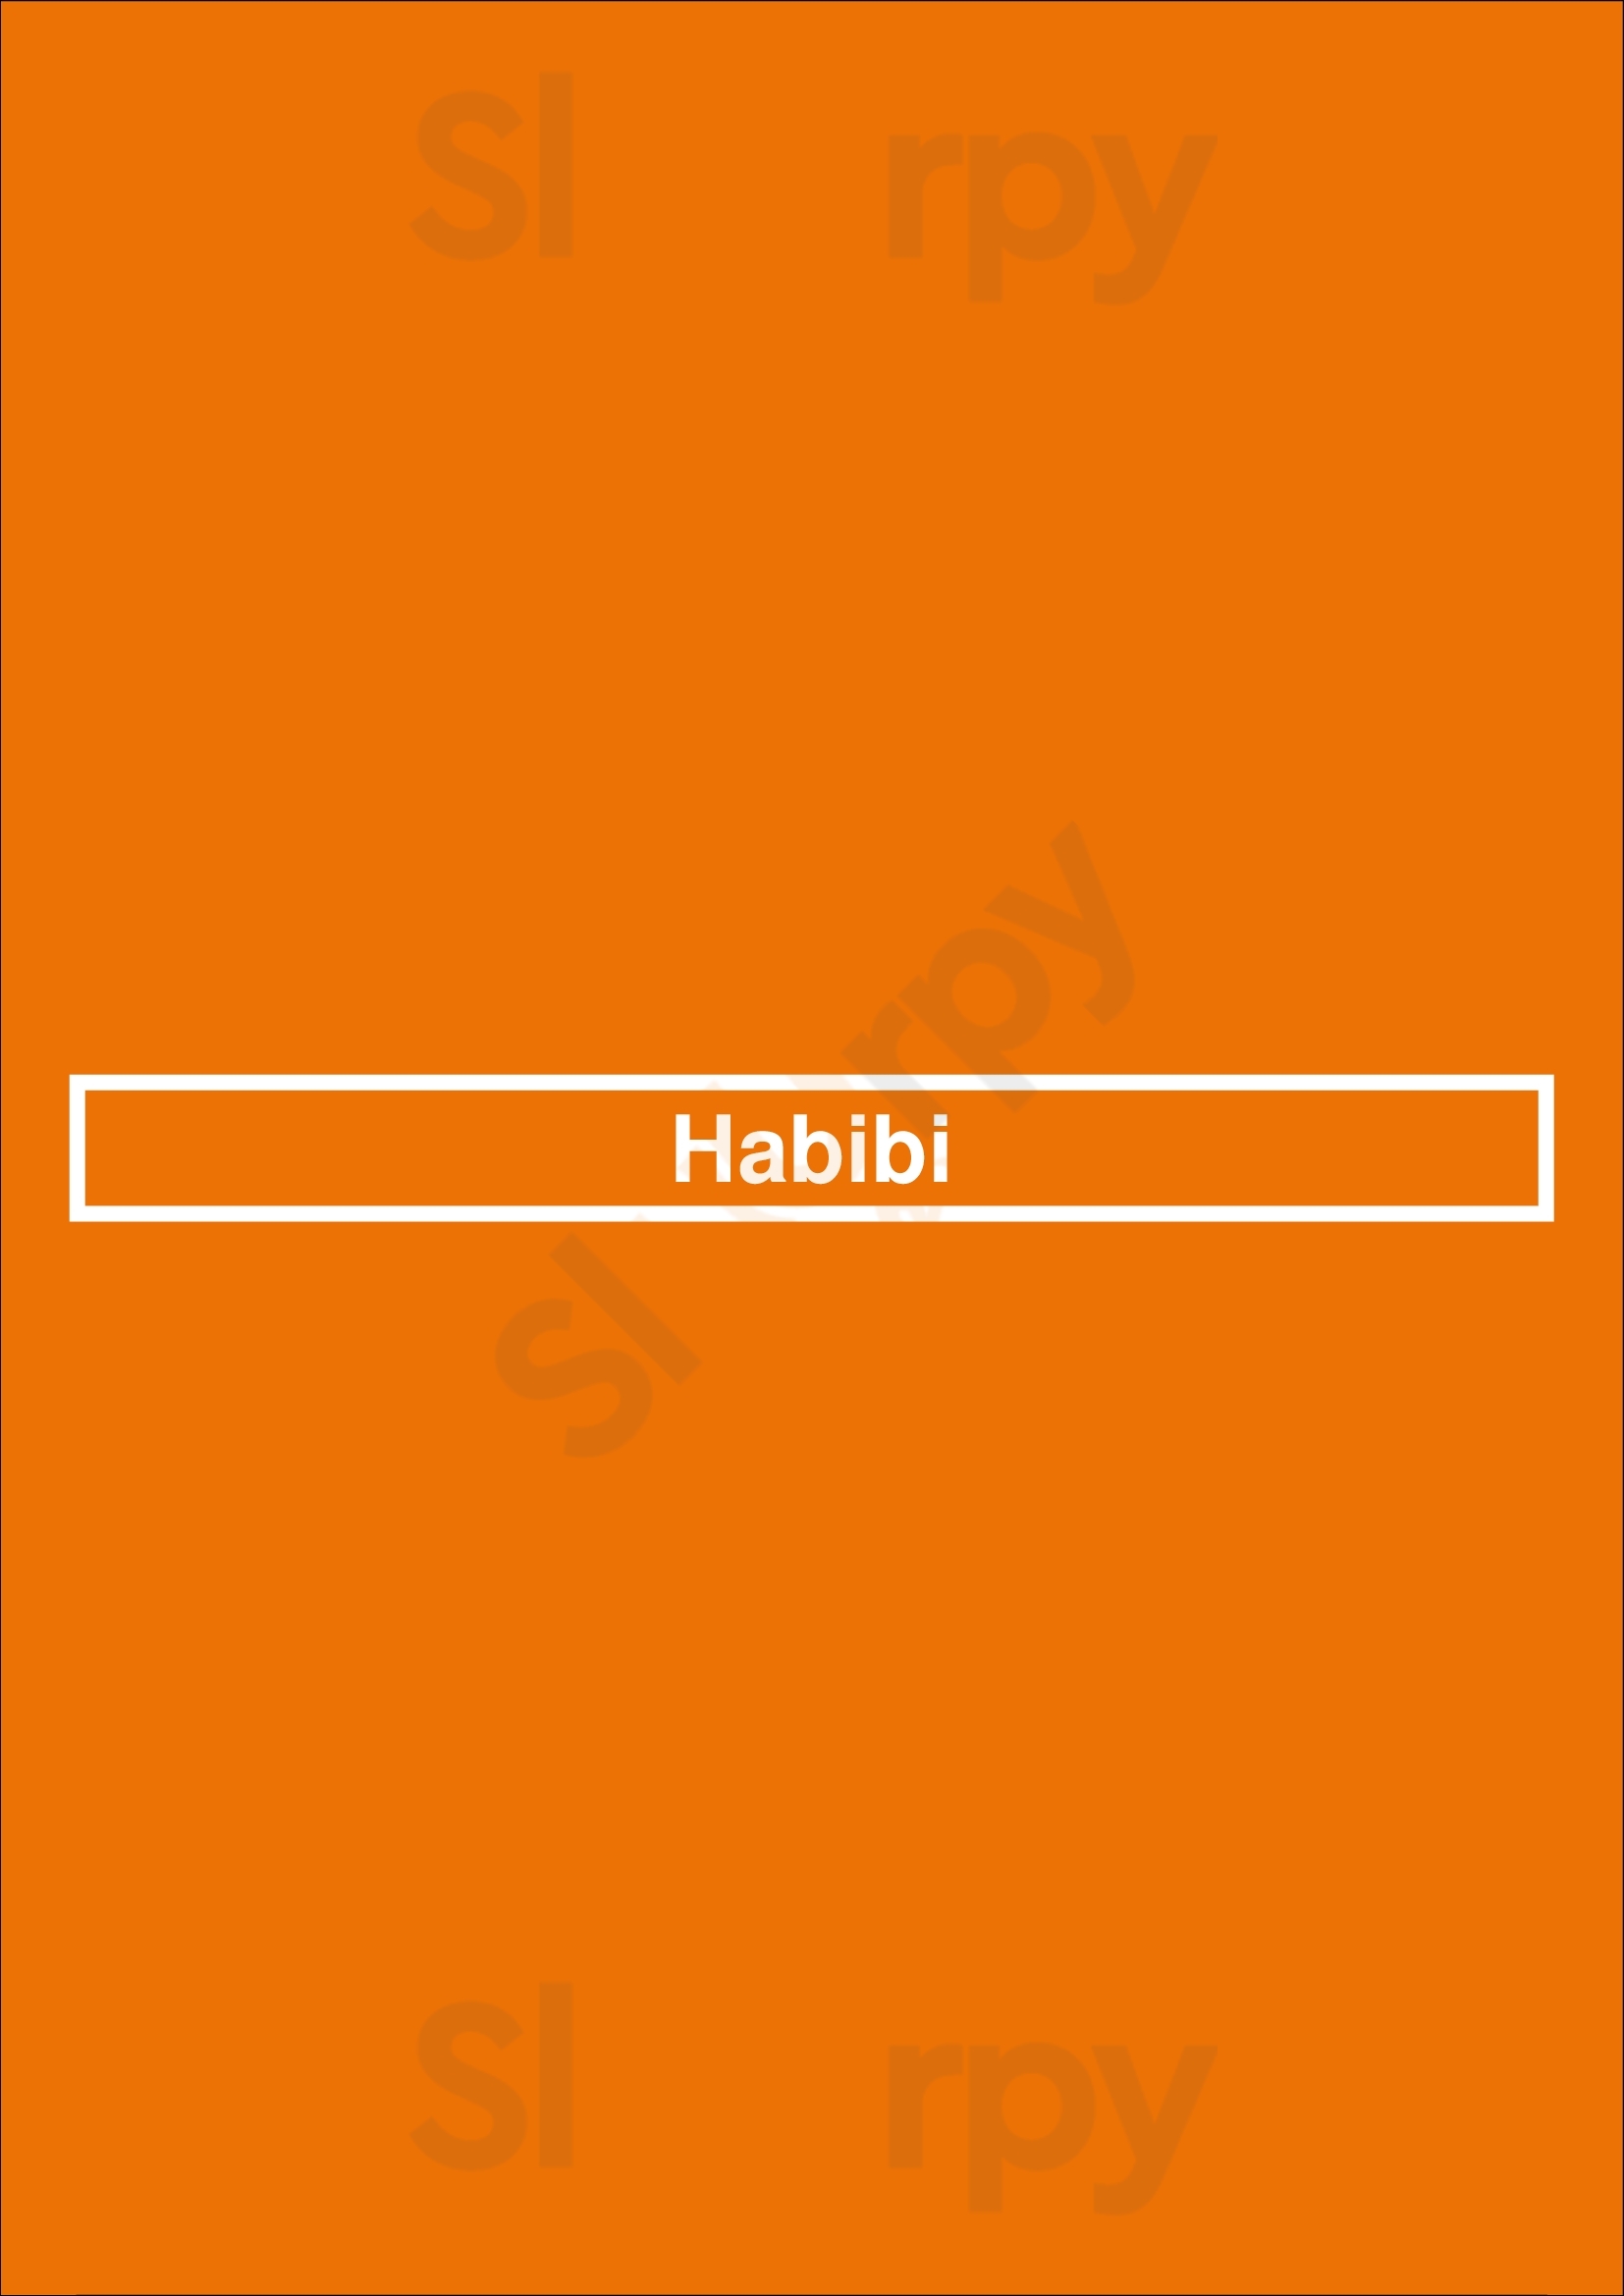 Habibi Amersfoort Menu - 1